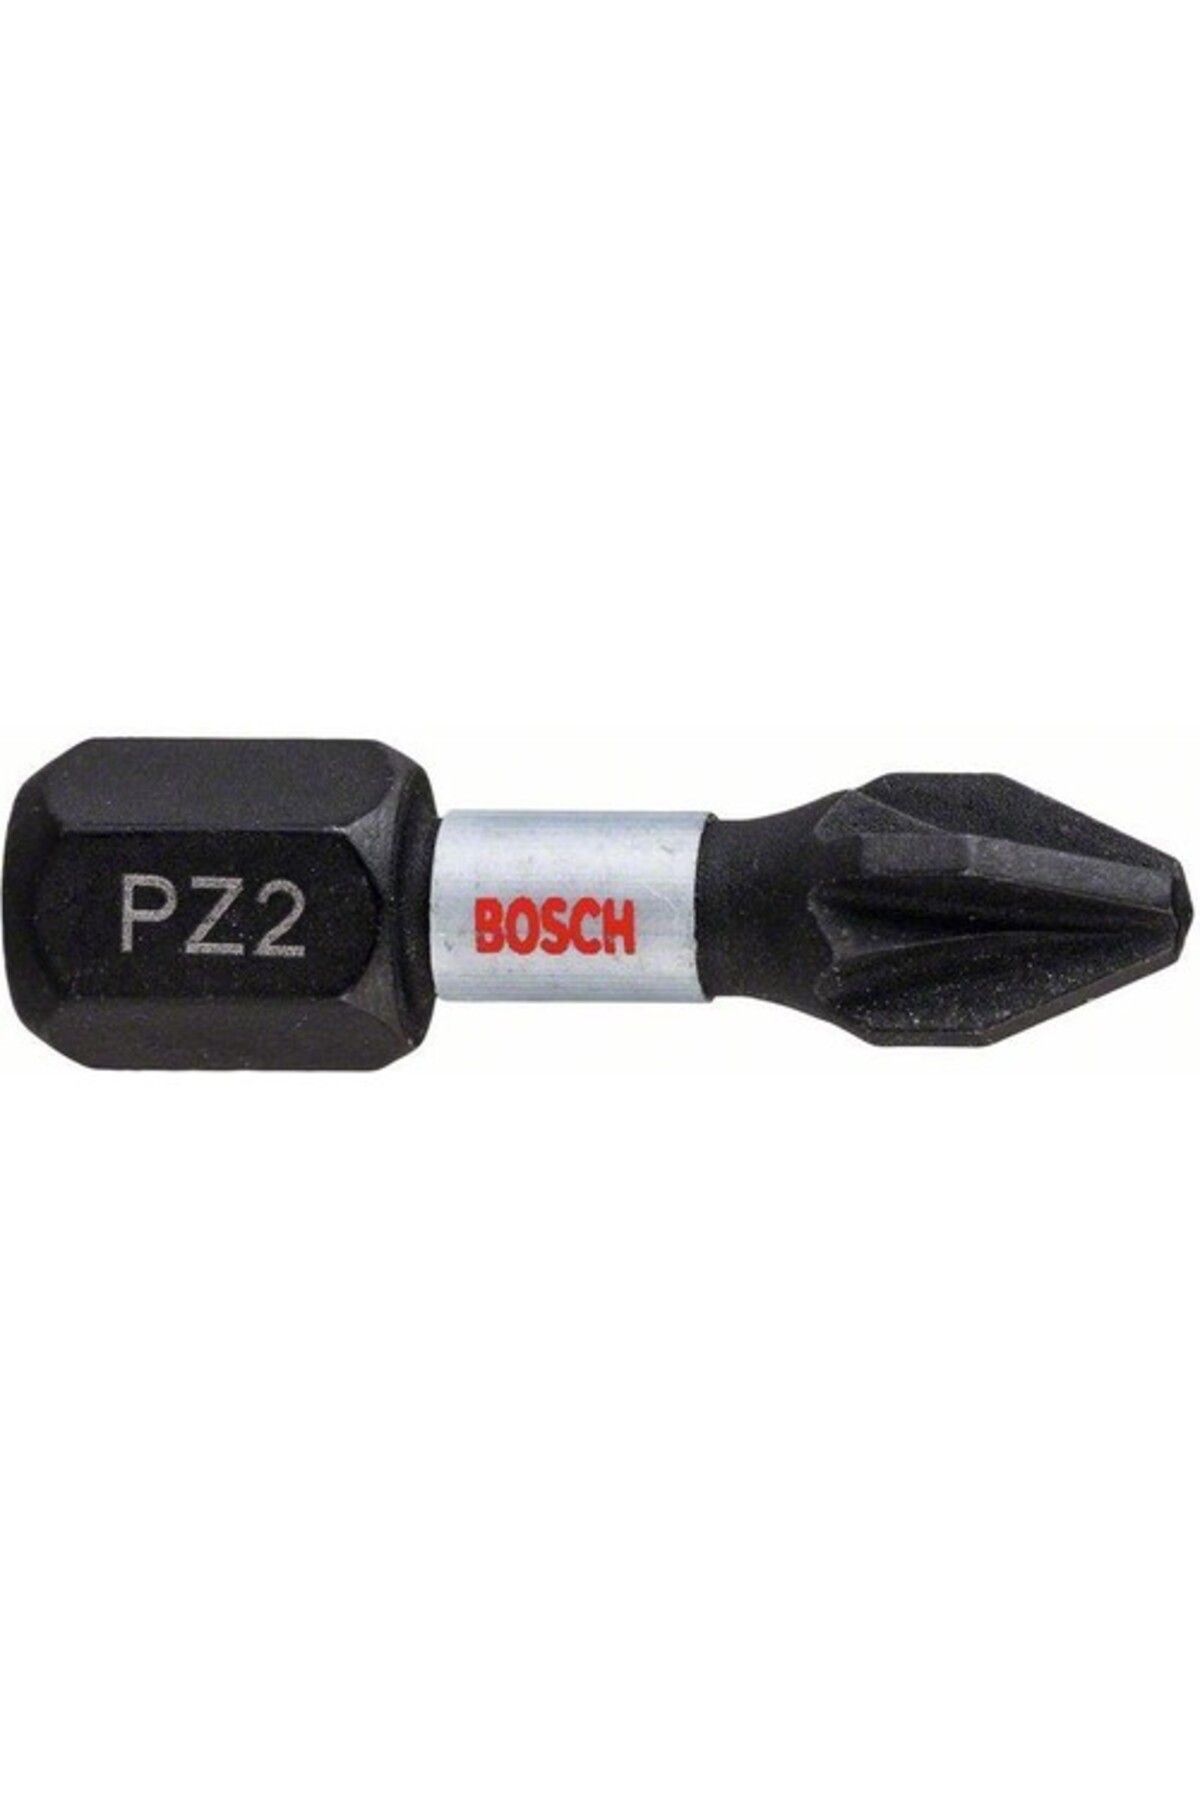 Bosch - Impact Control Serisi Vidalama Ucu Pz2*25 Mm 2'li